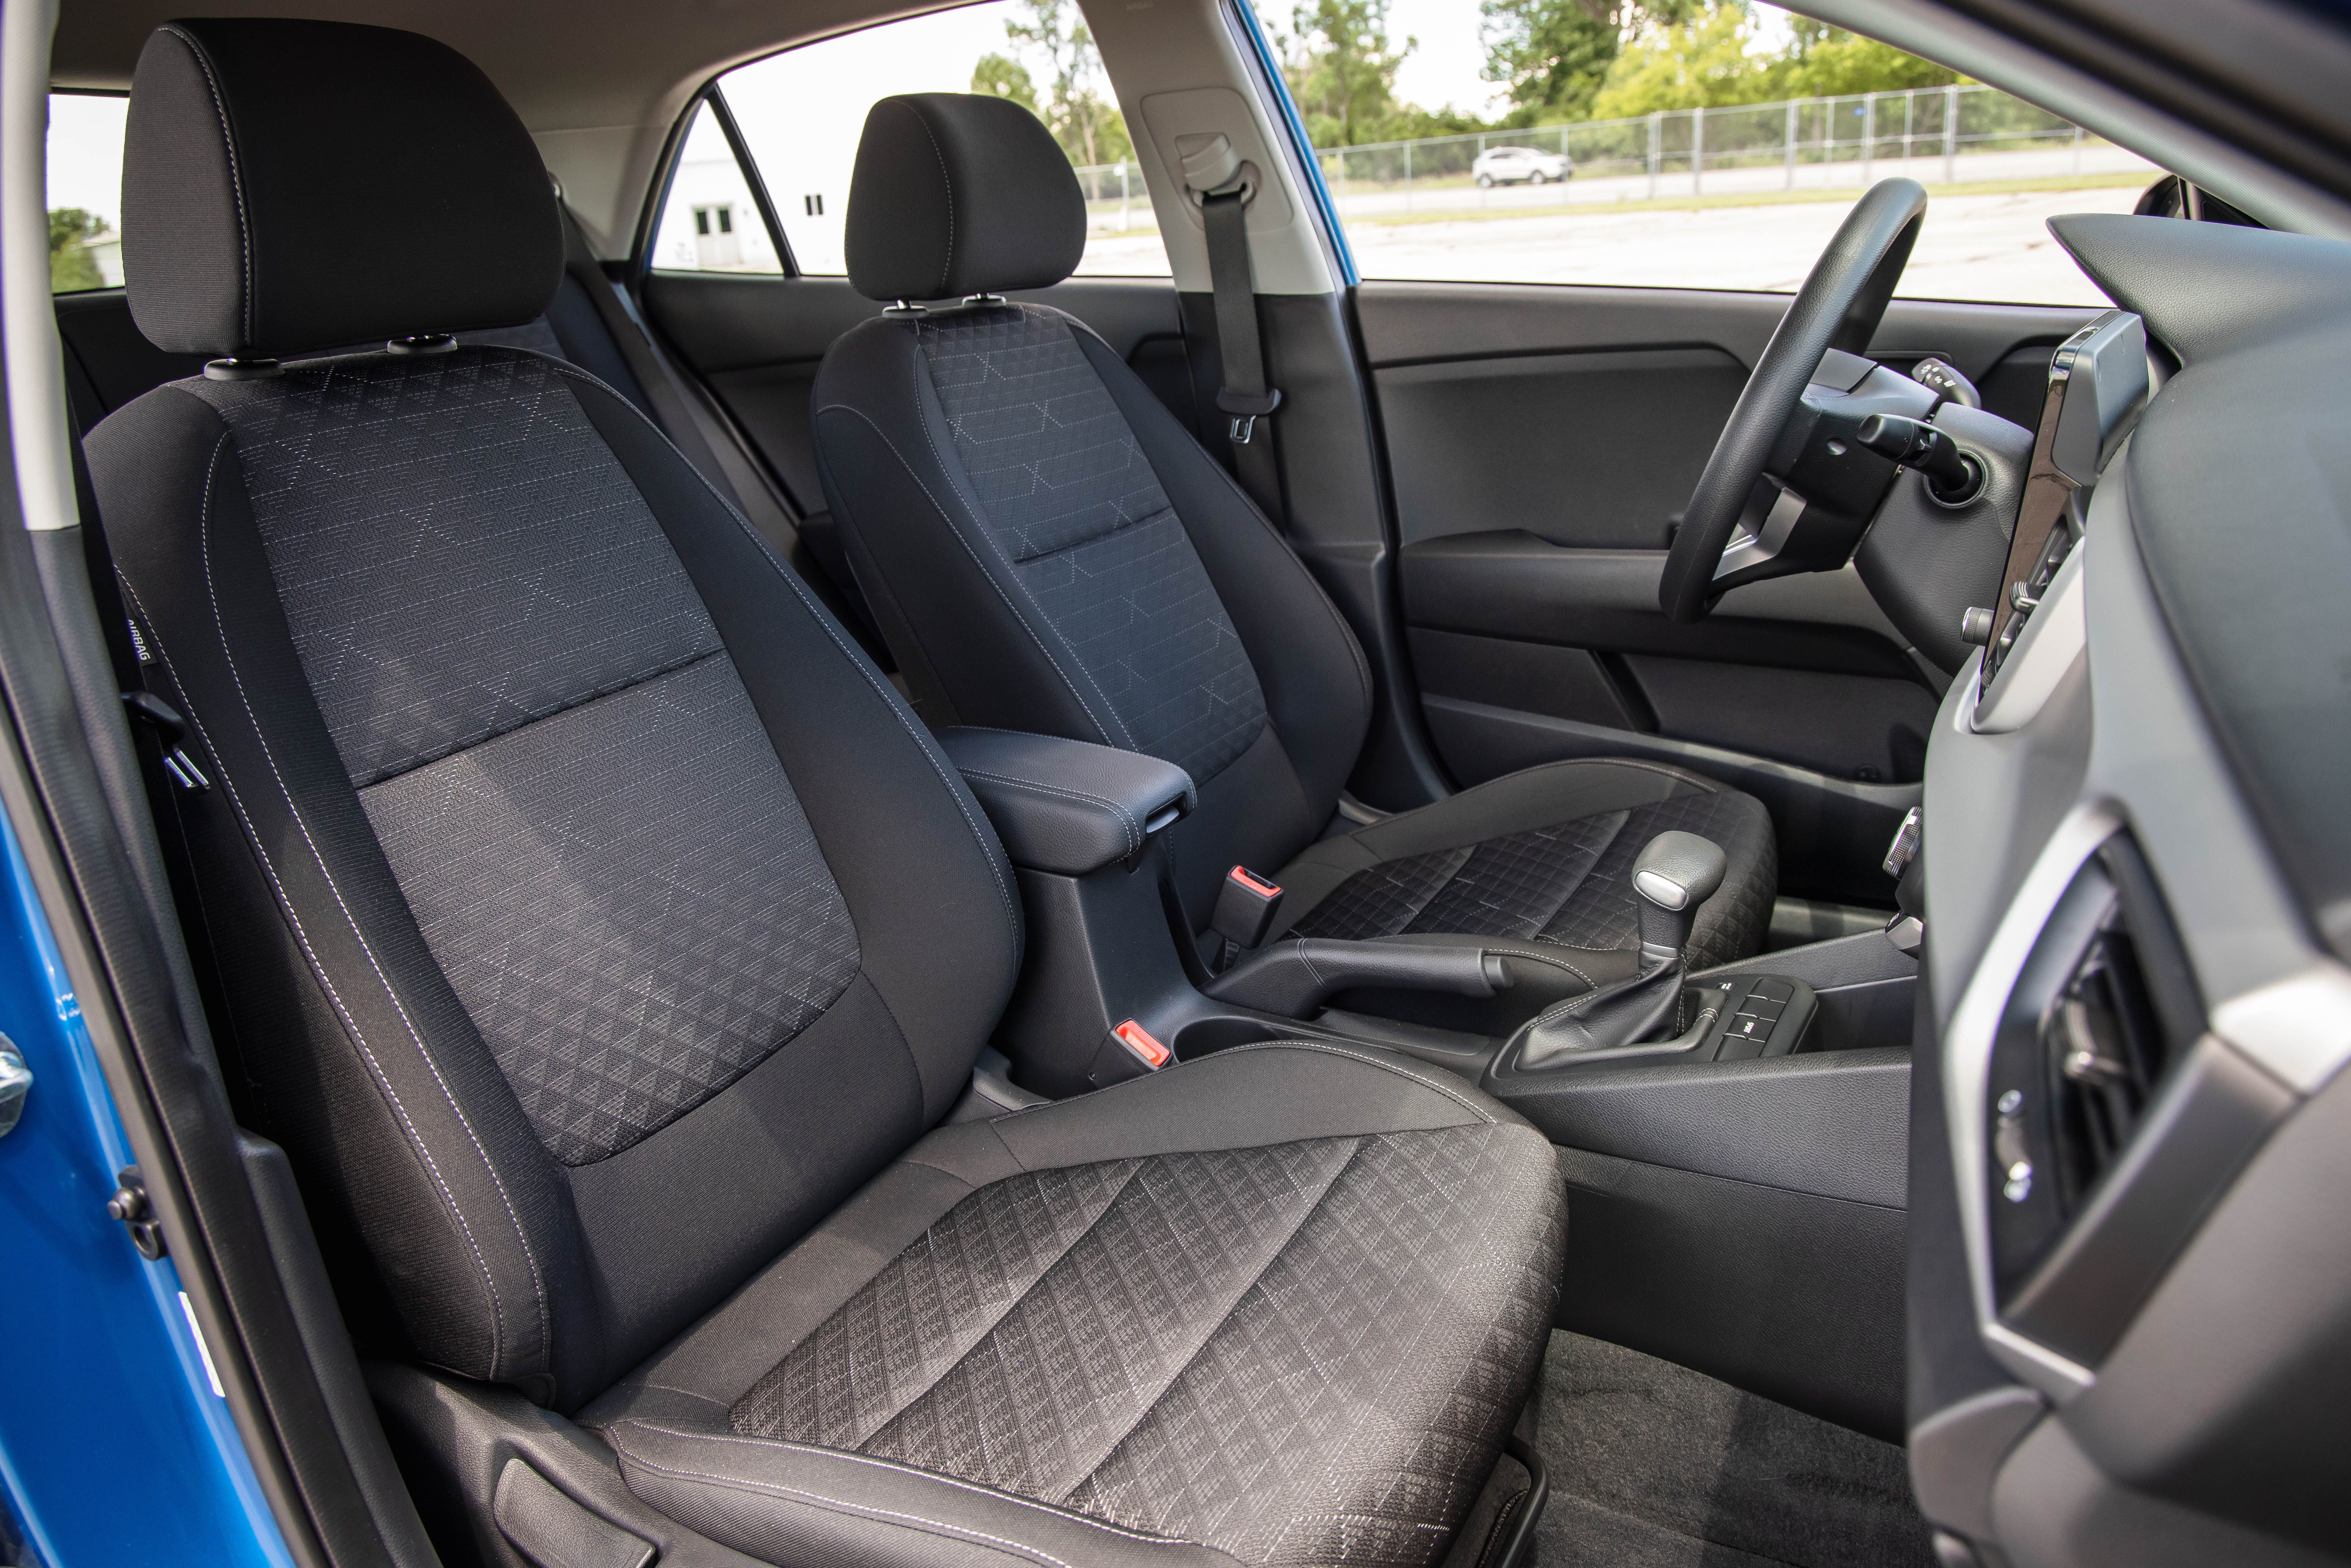 2021 kia rio s hatchback interior seats